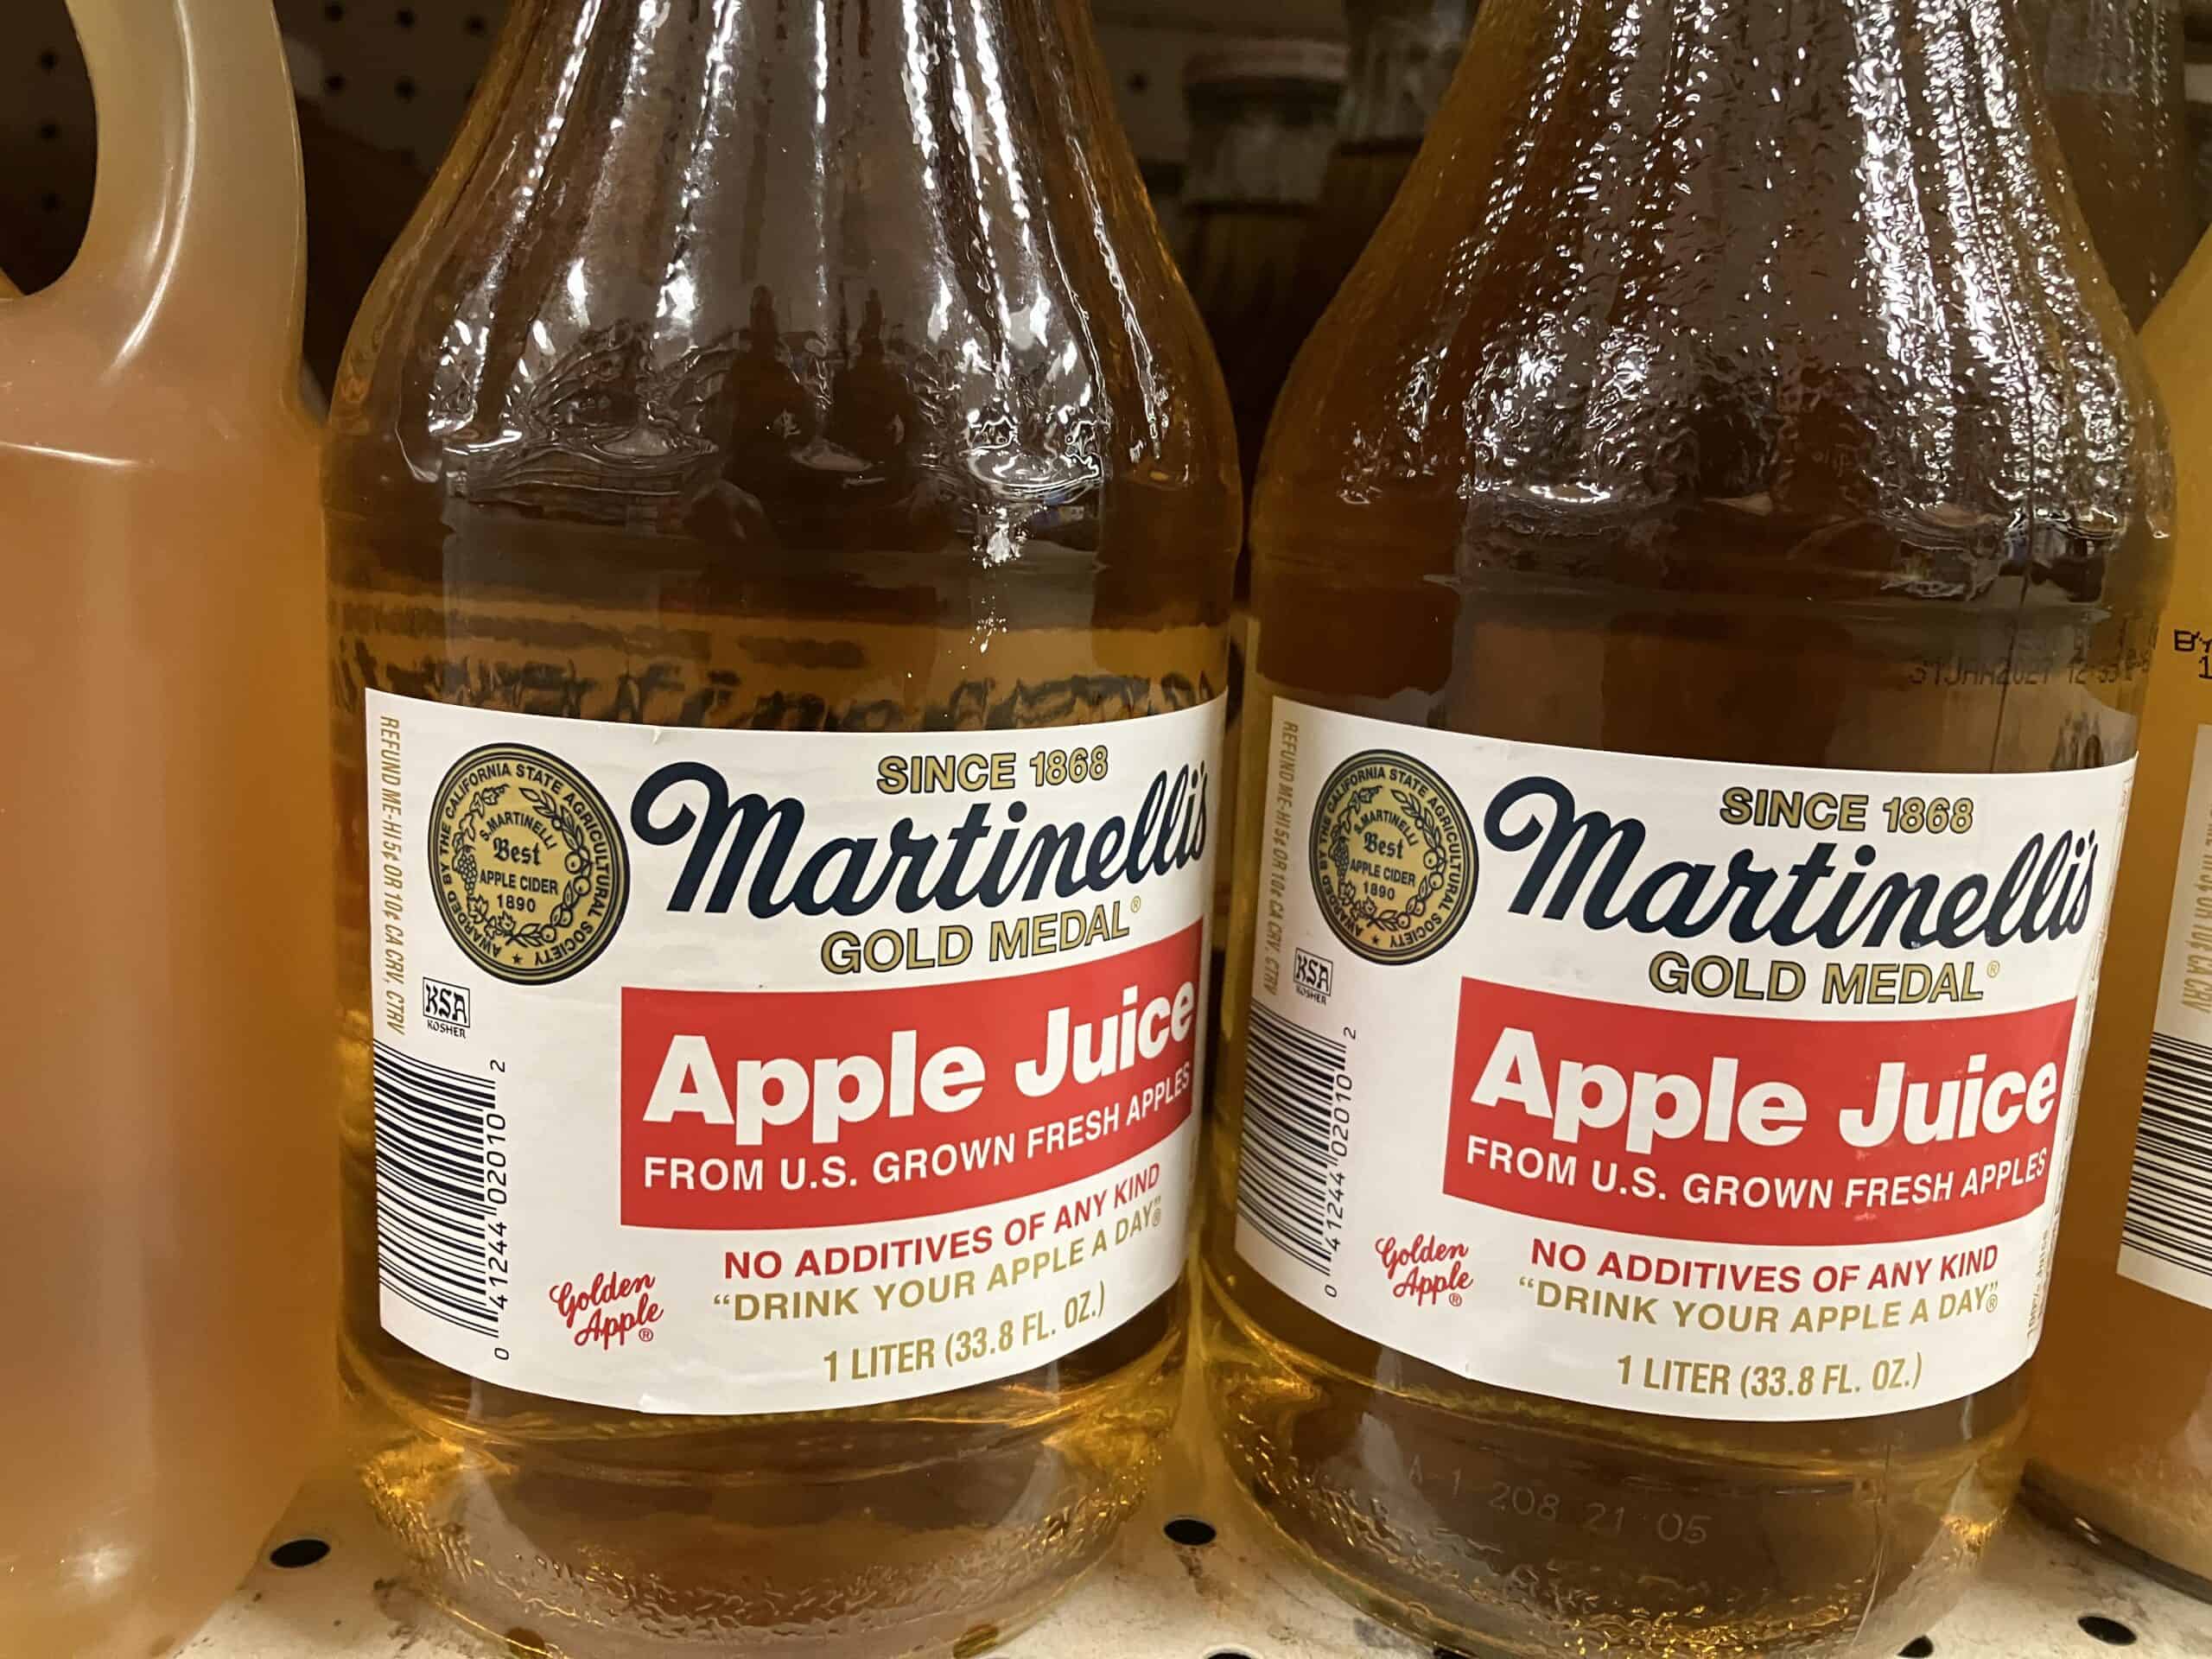 Martinelli's Gold Medal apple juice